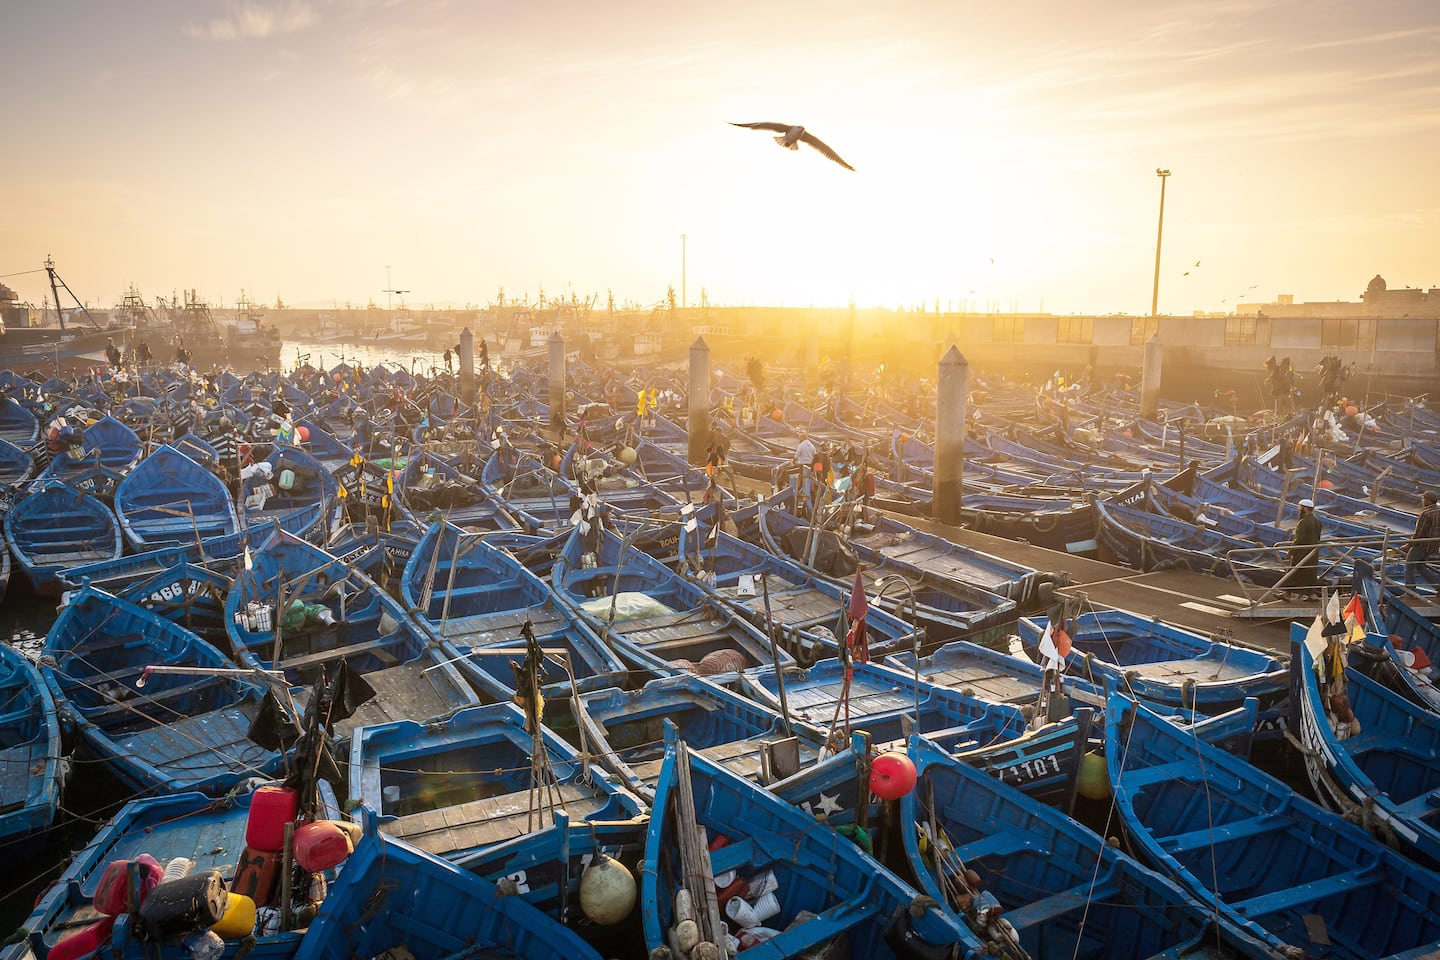 Photo objective: Essaouira, the city of blue boats